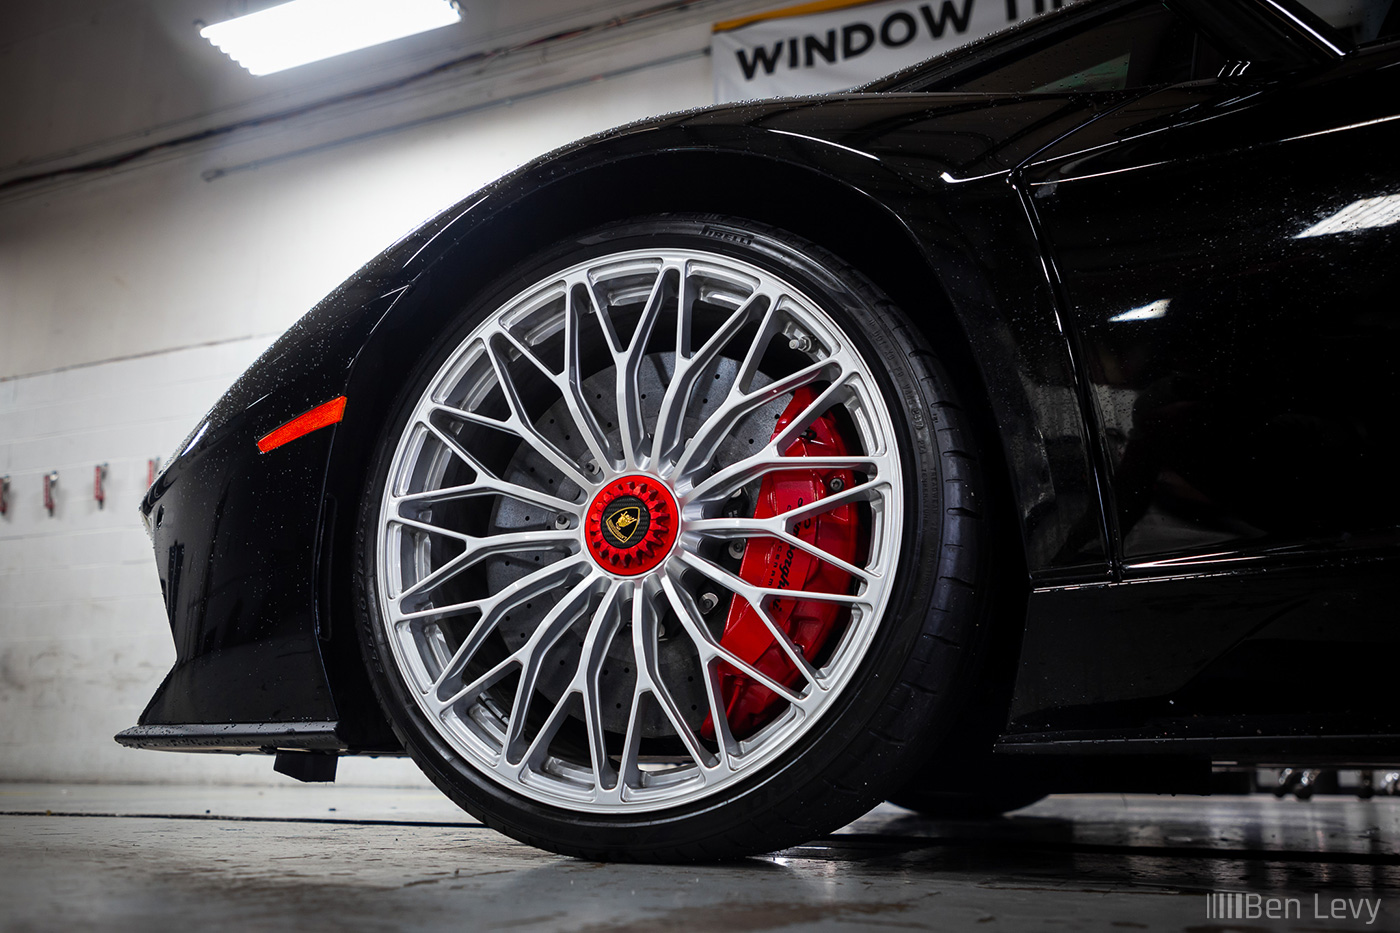 Lamborghini Aventador S Wheel with Red Center Lug